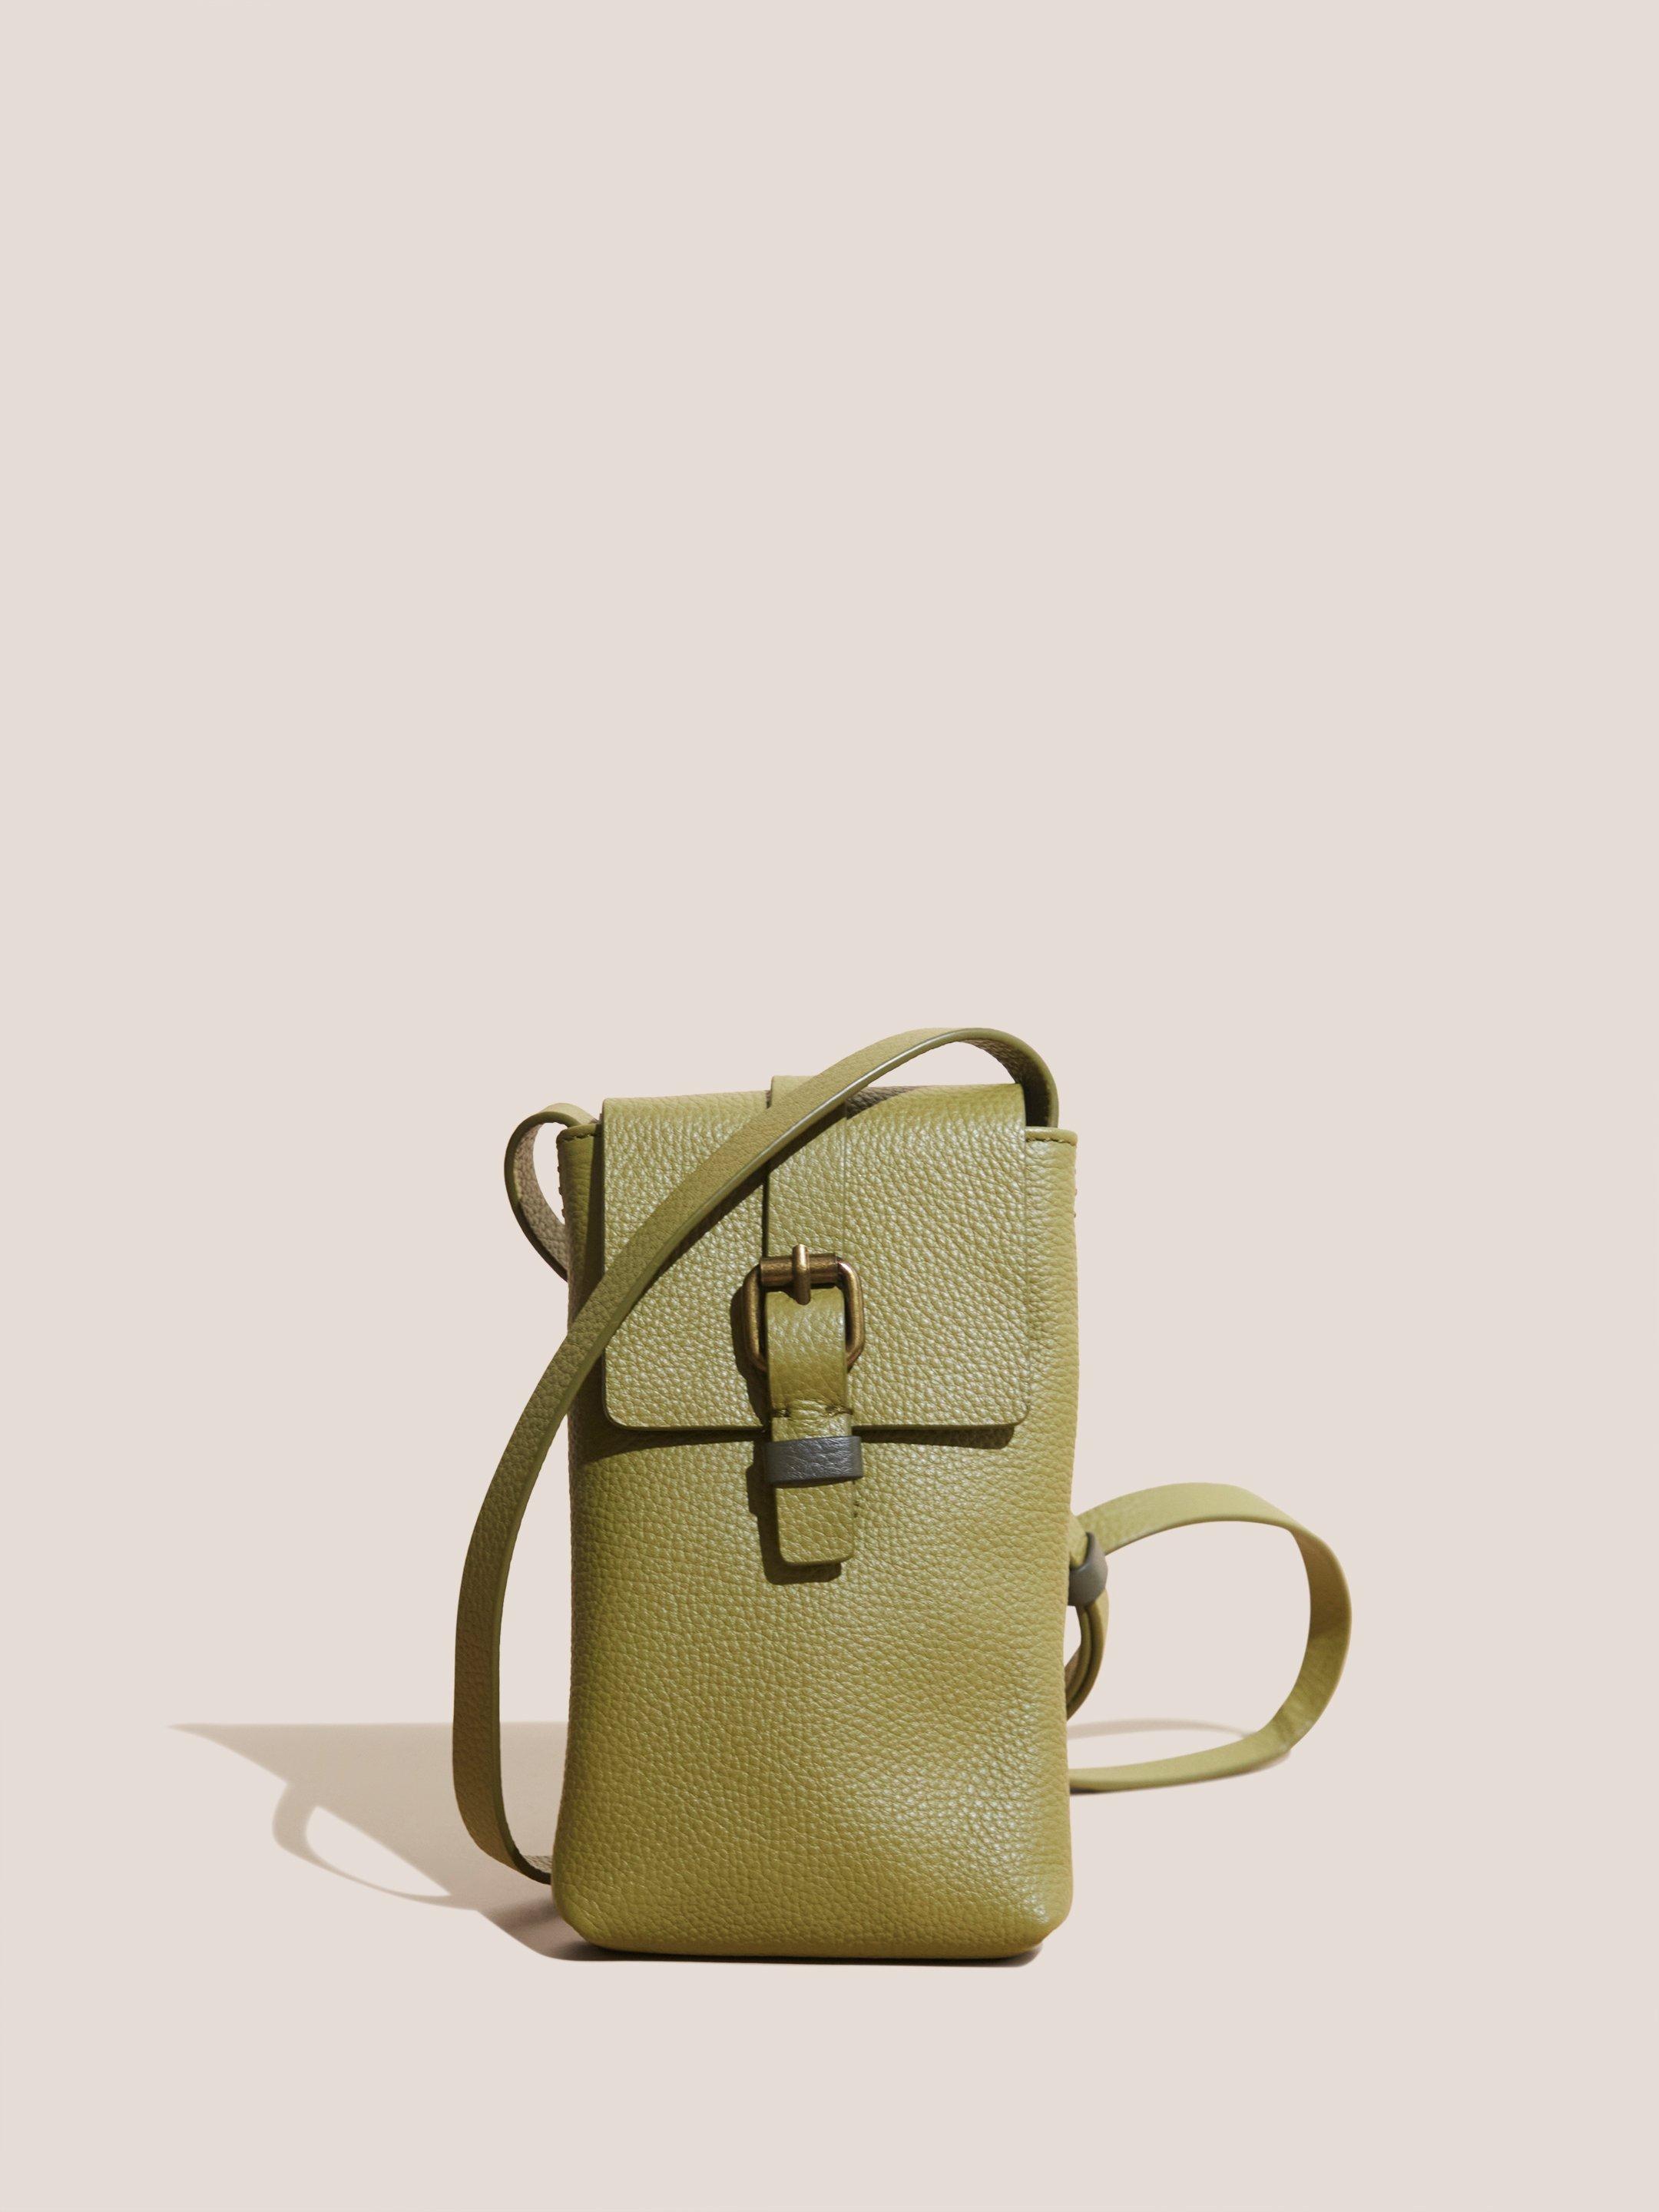 Clara Buckle Phone Bag in DUS GREEN - MODEL FRONT